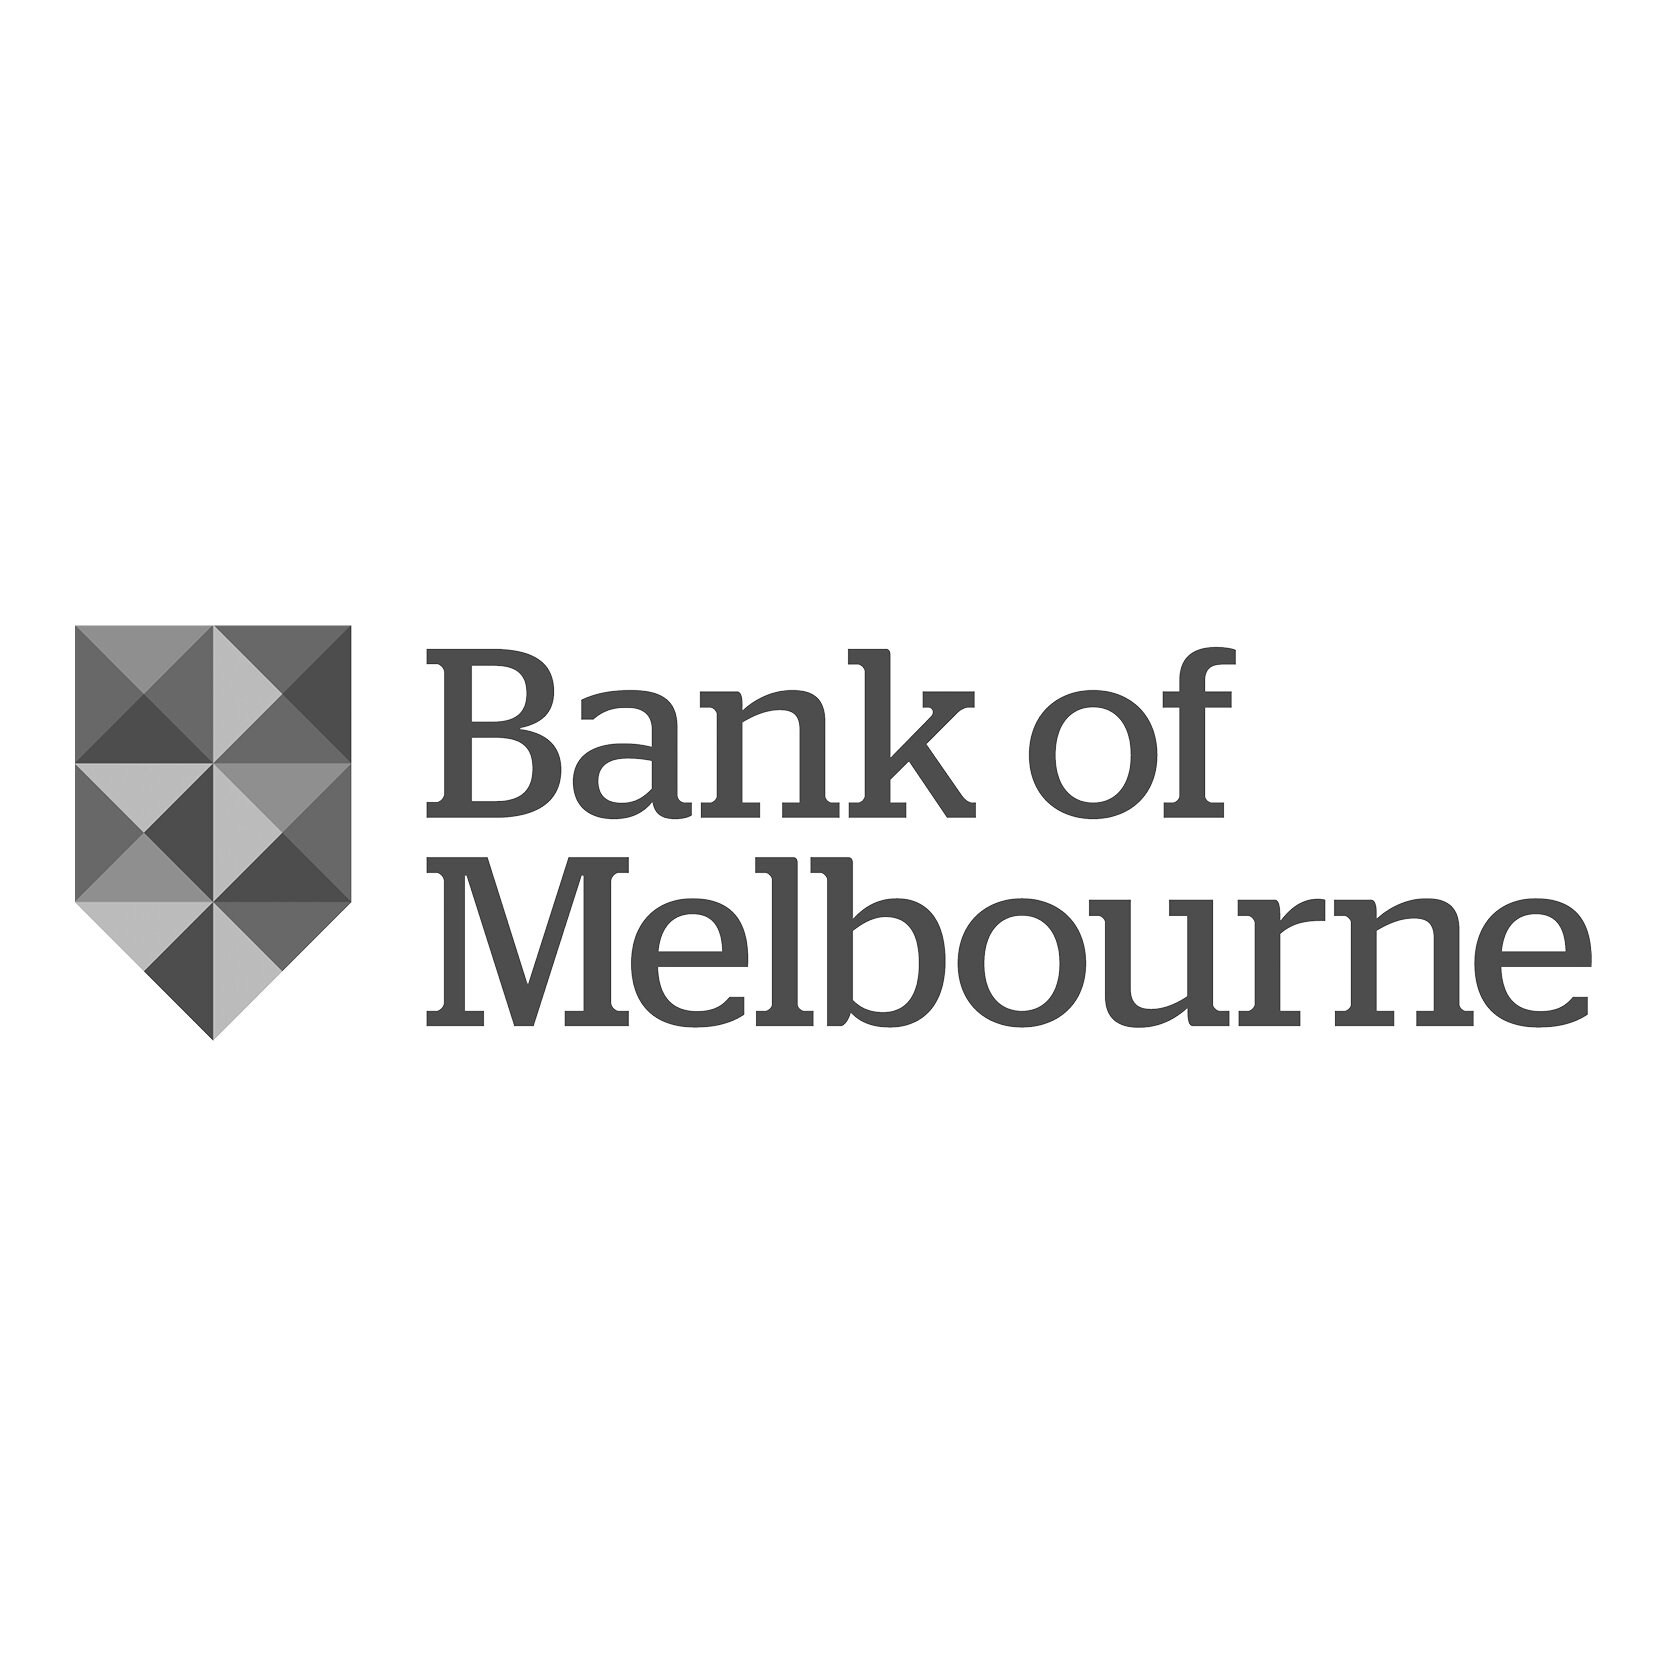 Bank Of Melbourne (Copy) (Copy)